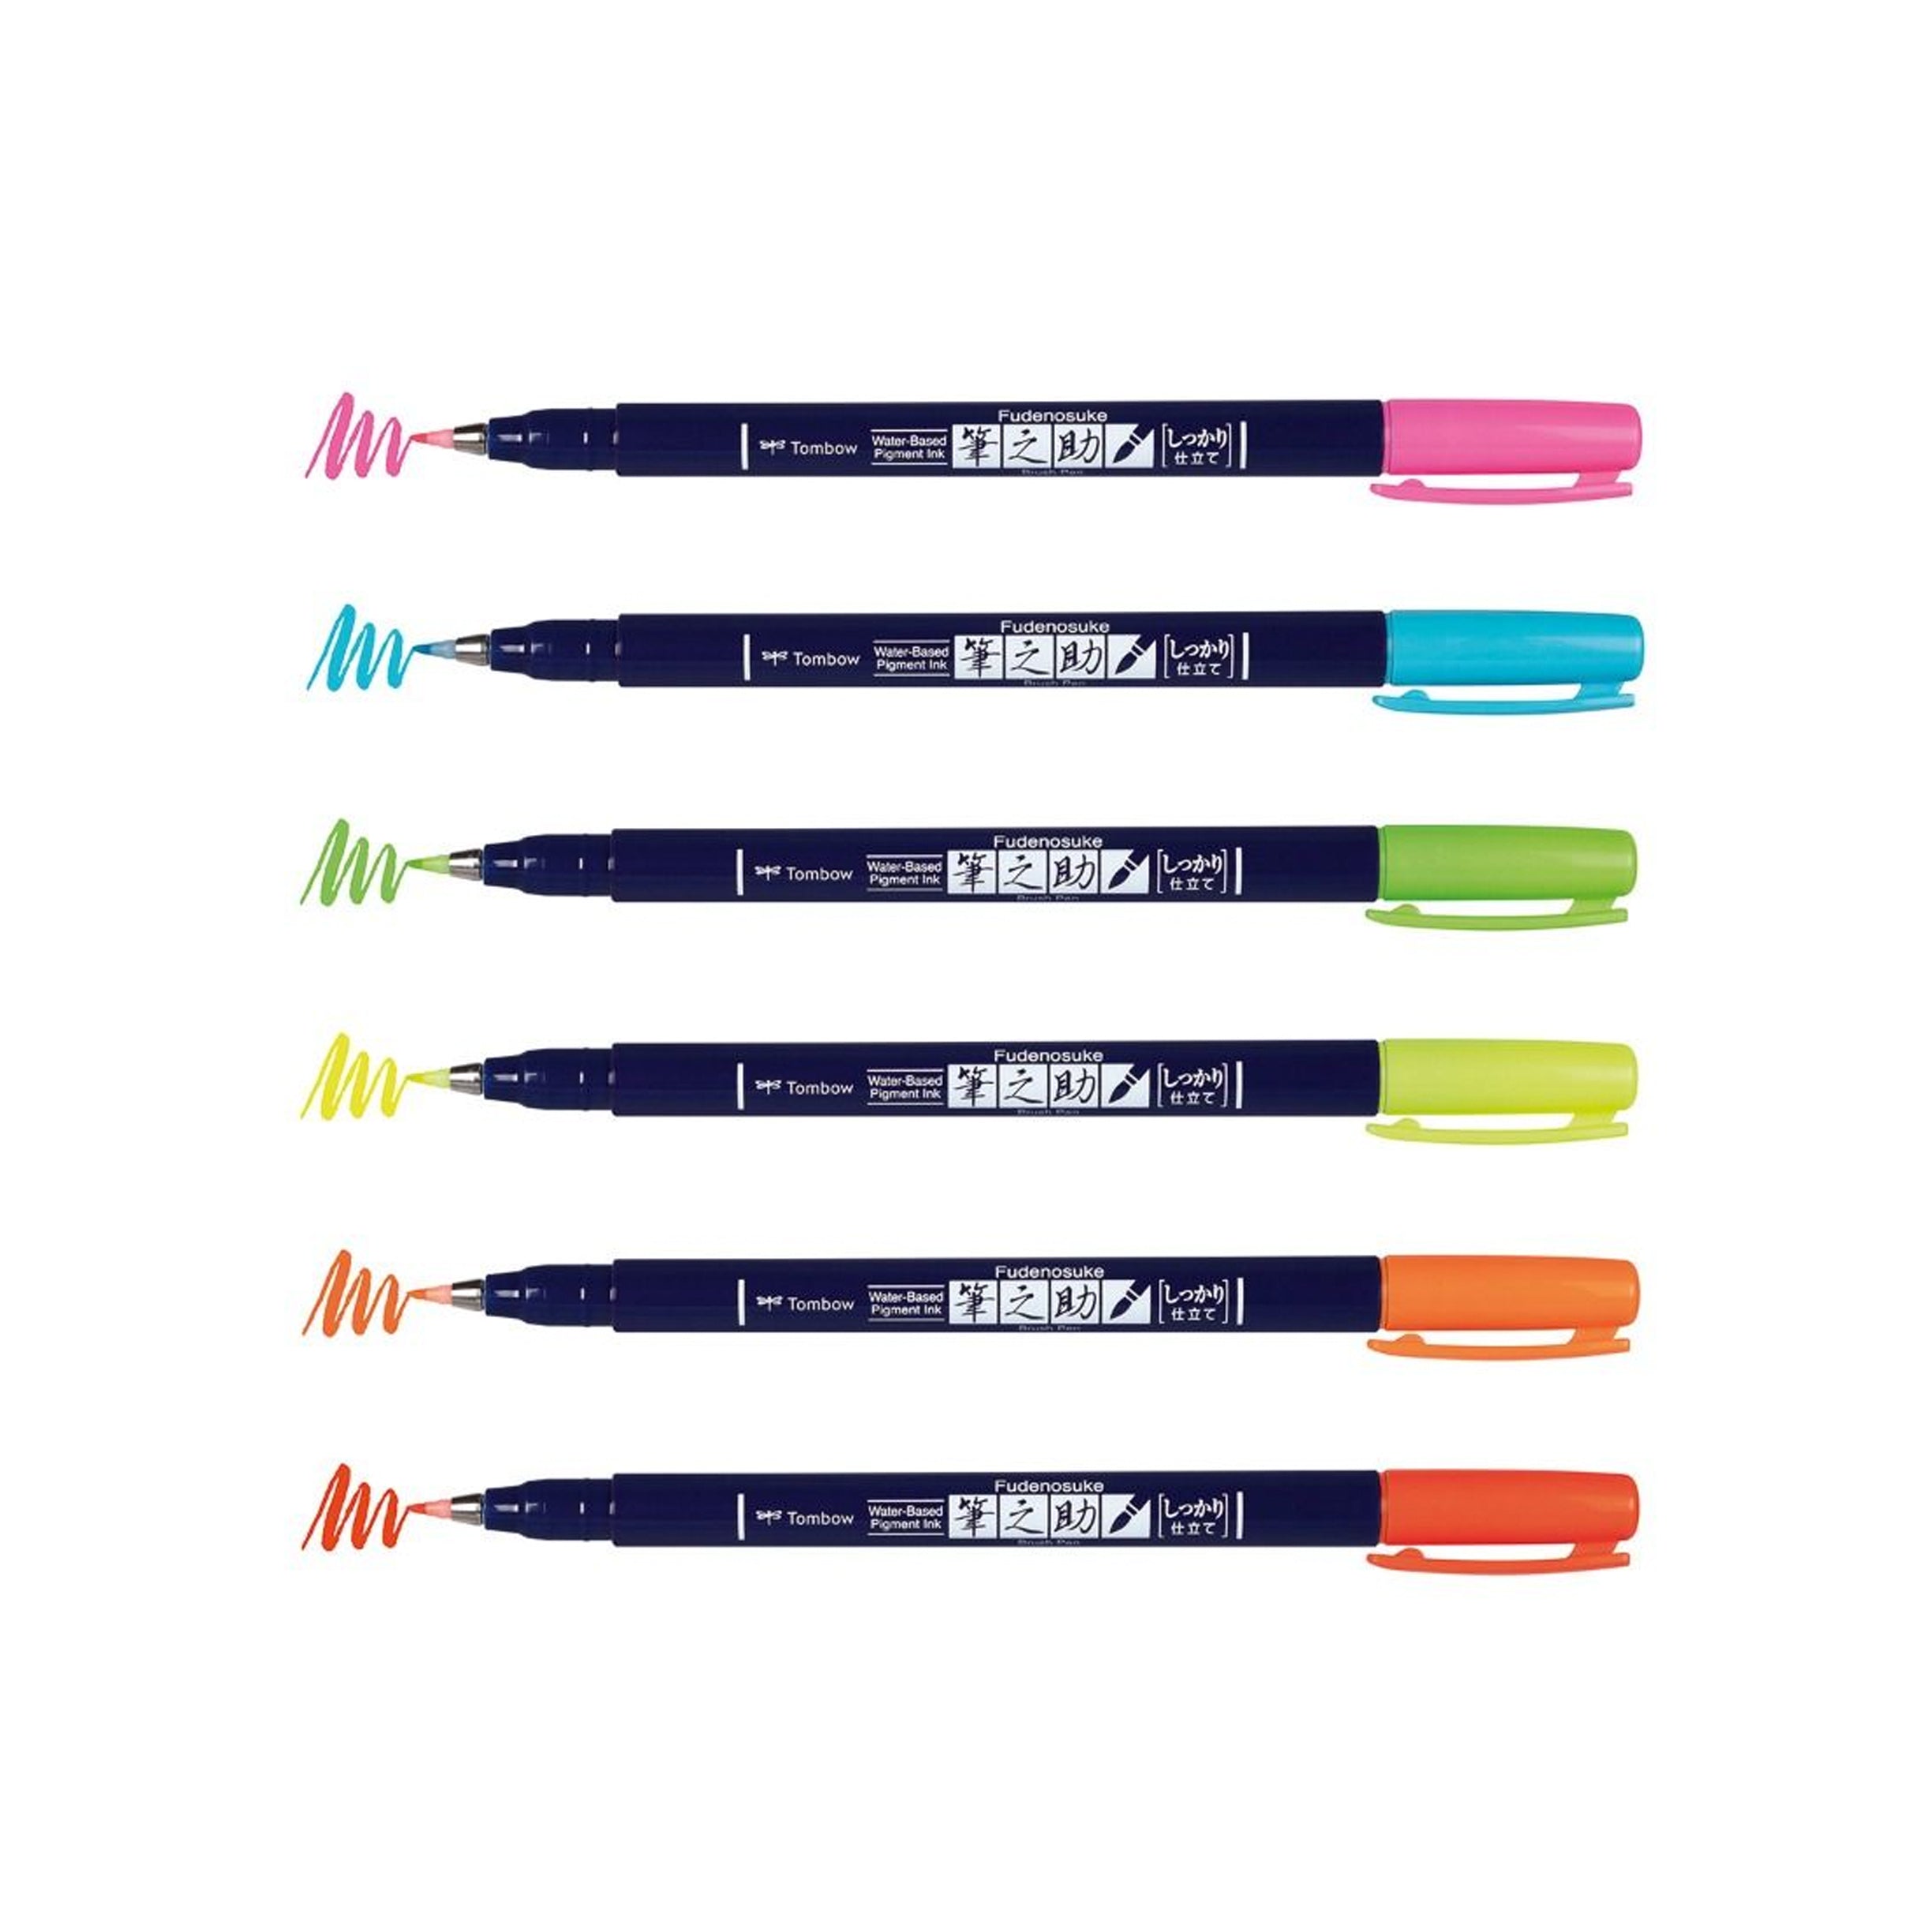 Tombow Fudenosuke Neon Brush Pen